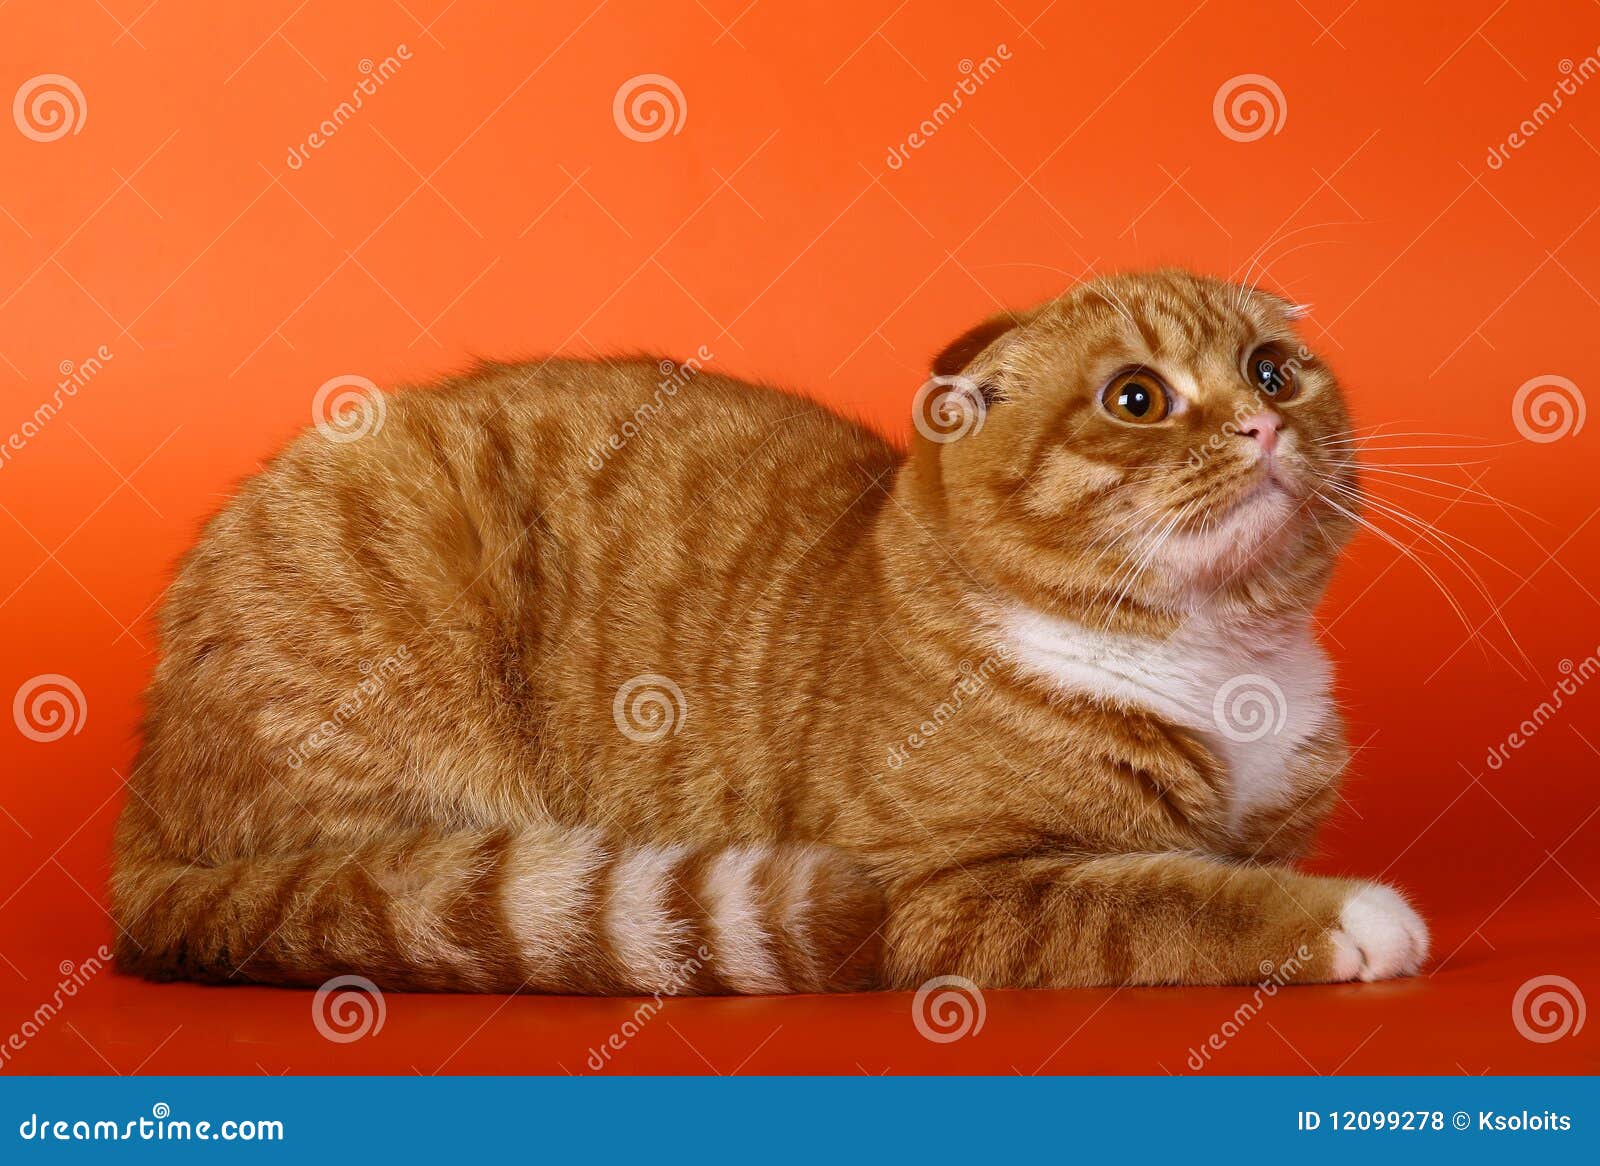 Scottish Cat On An Orange Background Royalty Free Stock ...